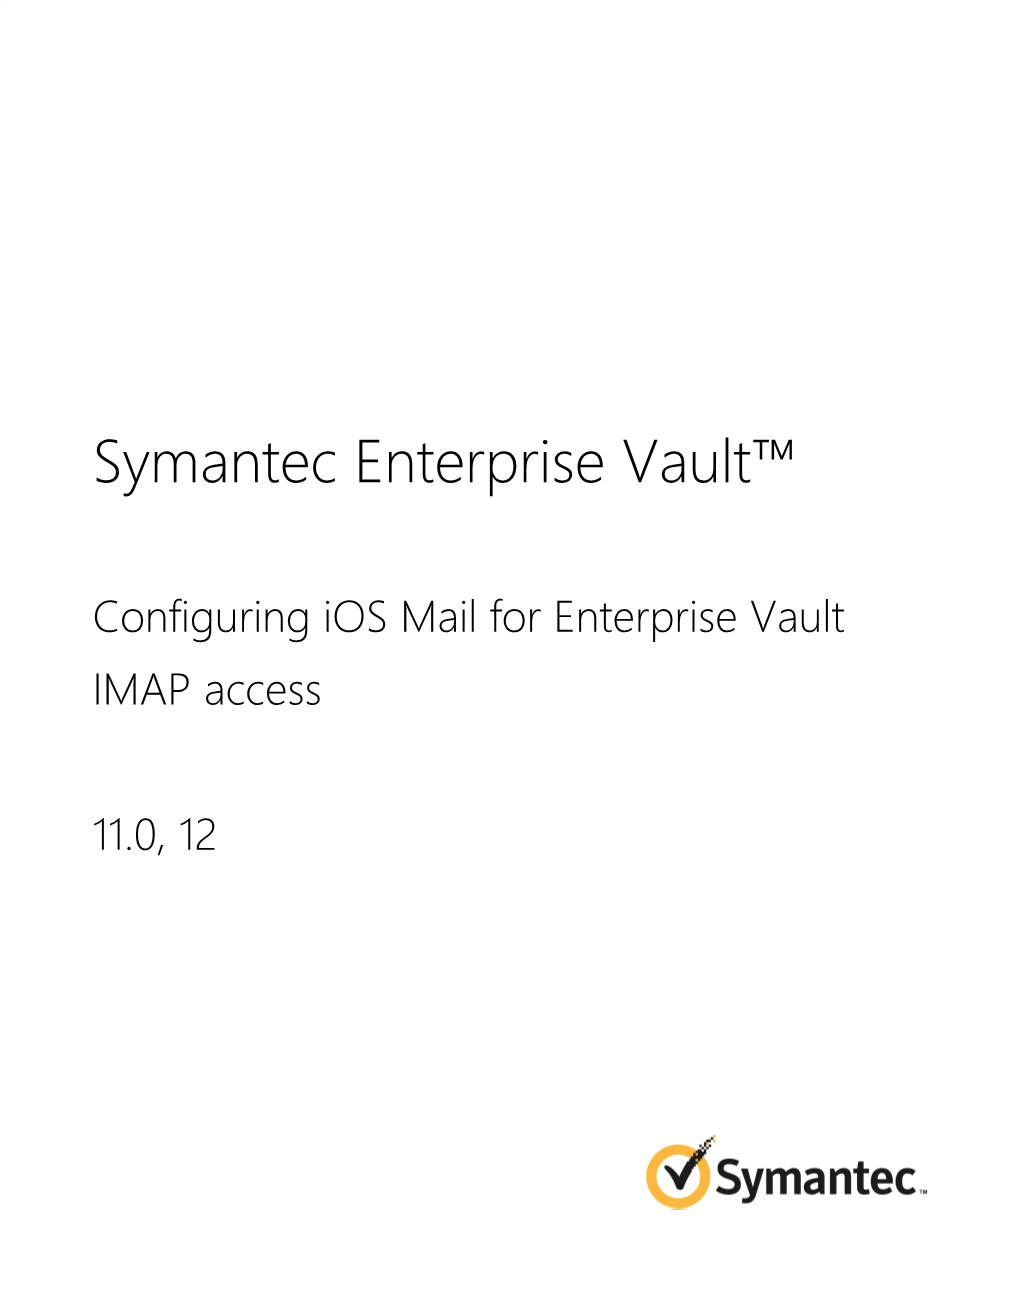 Configuring Ios Mail for Enterprise Vault IMAP Access